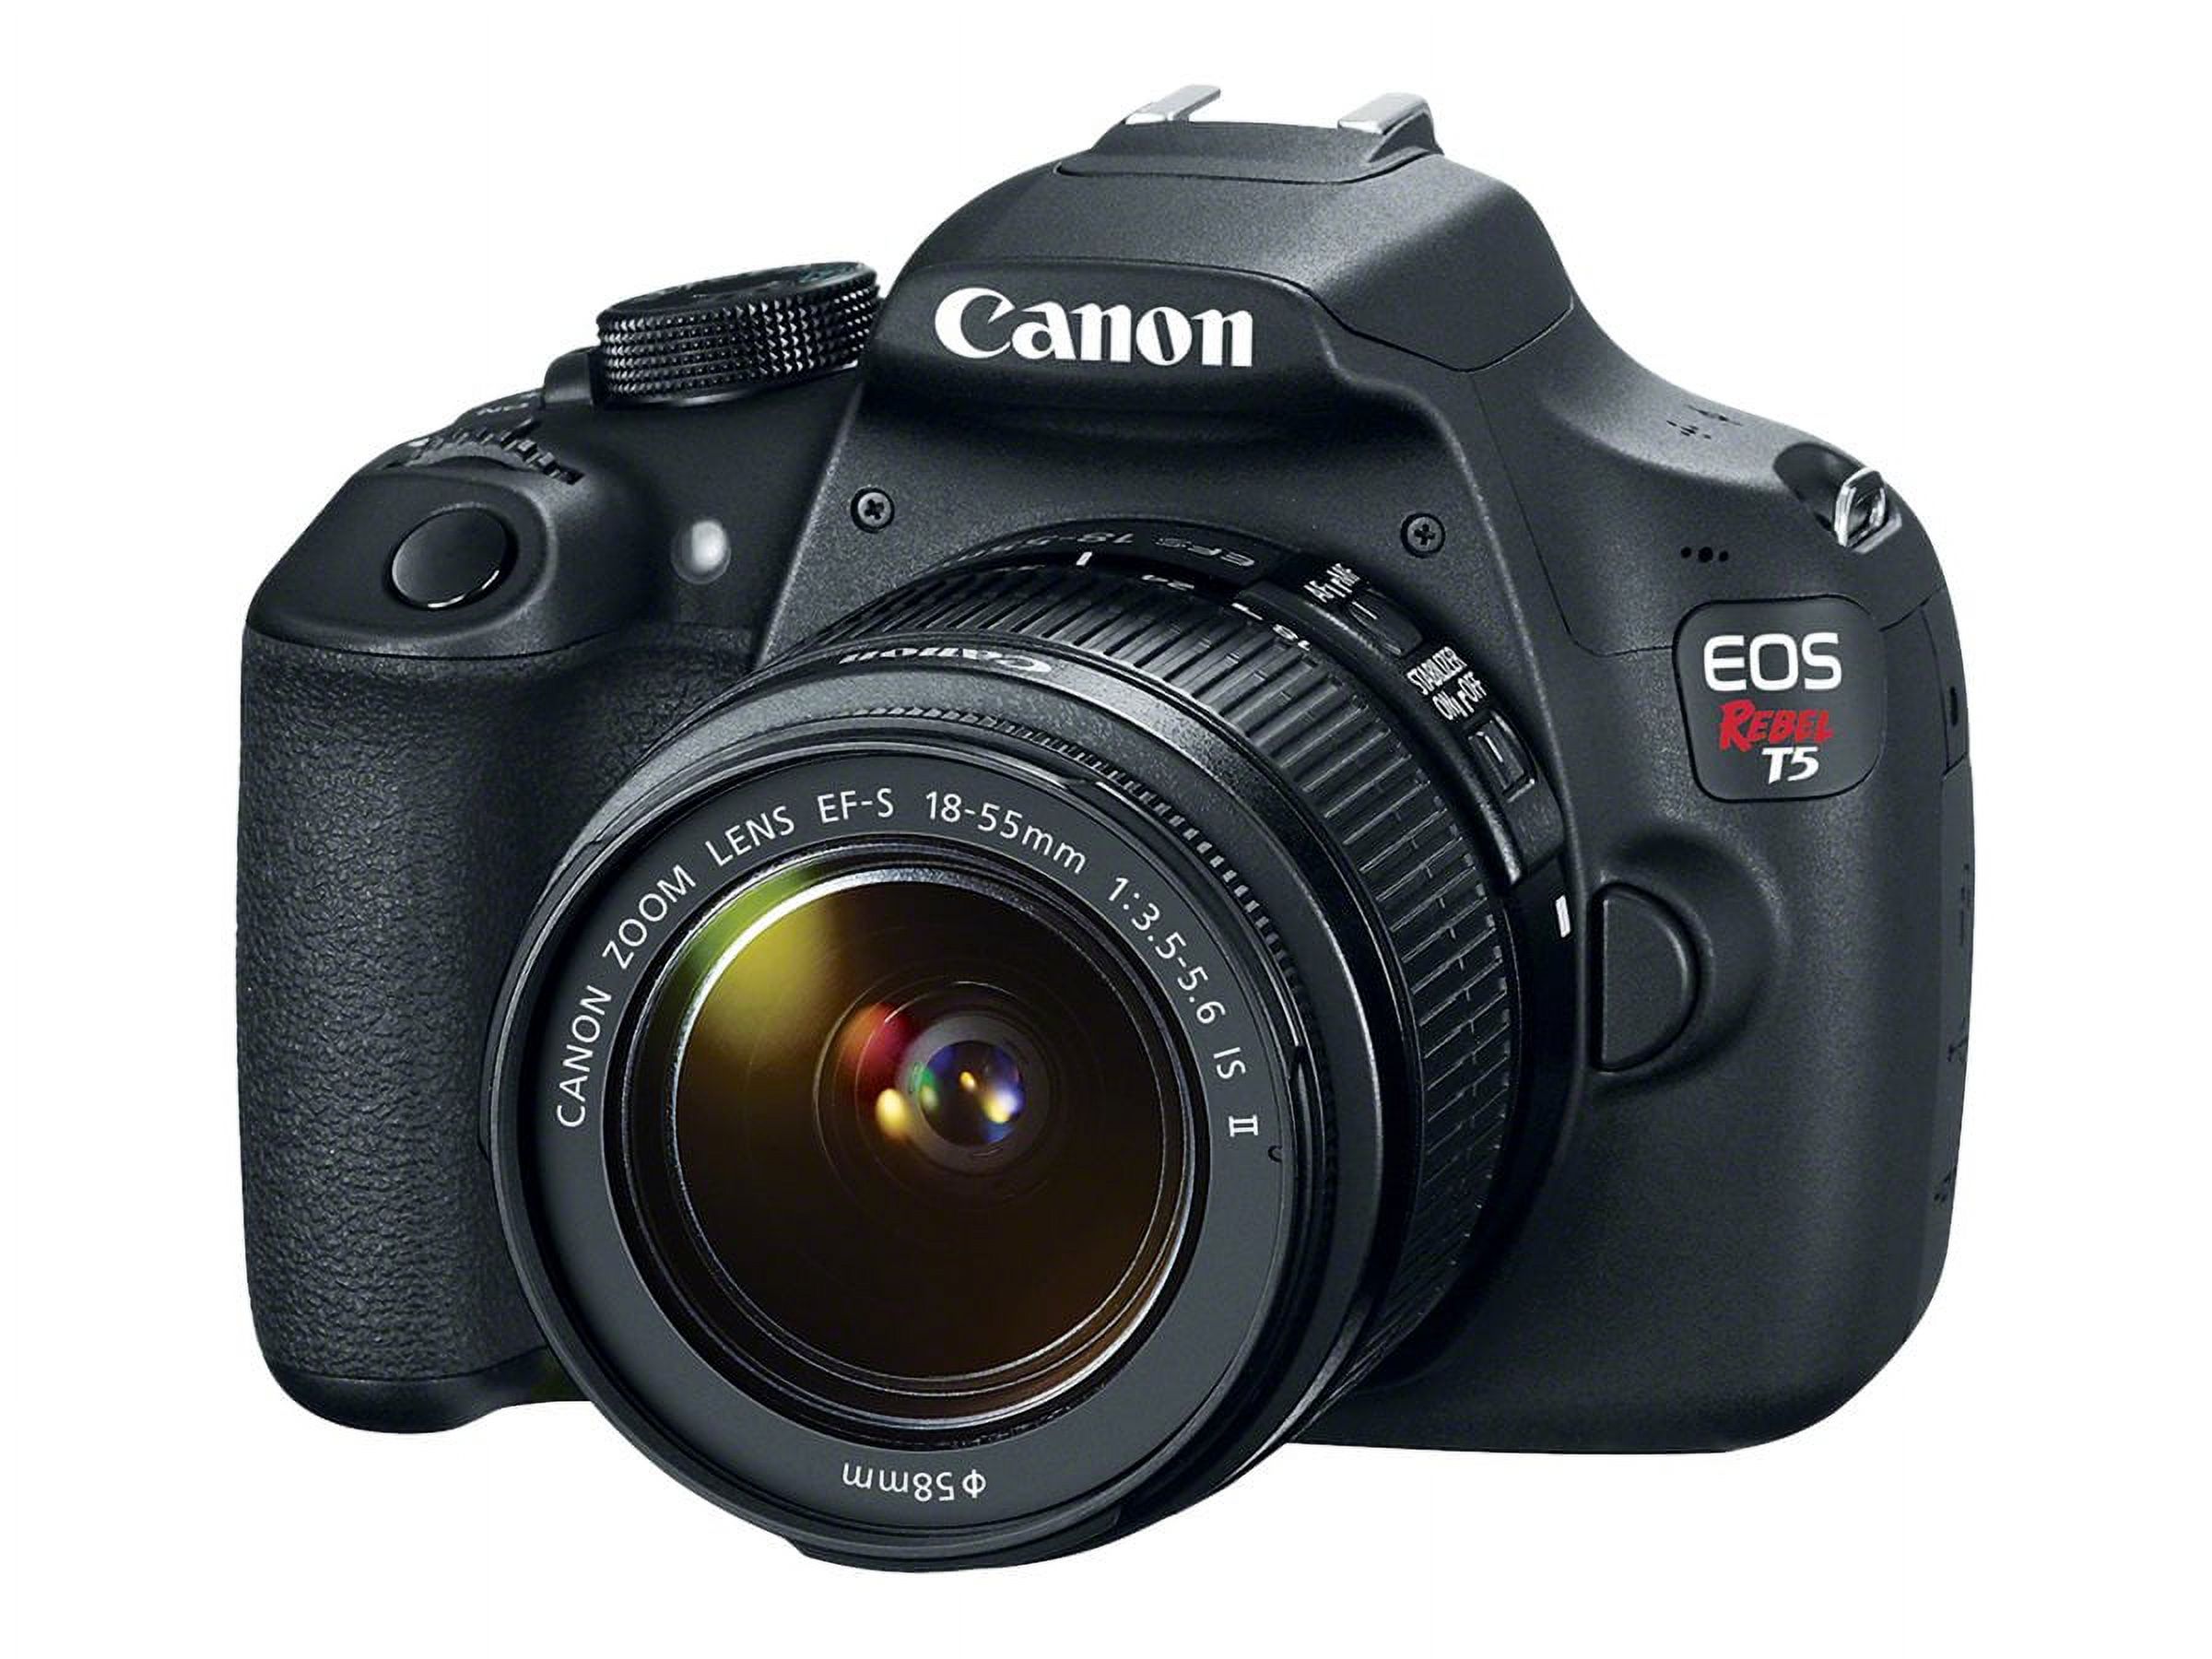 Canon EOS Rebel T5 - Digital camera - SLR - 18.0 MP - APS-C - 1080p - 3x optical zoom EF-S 18-55mm IS II and EF 75-300mm III lenses - black - image 1 of 4